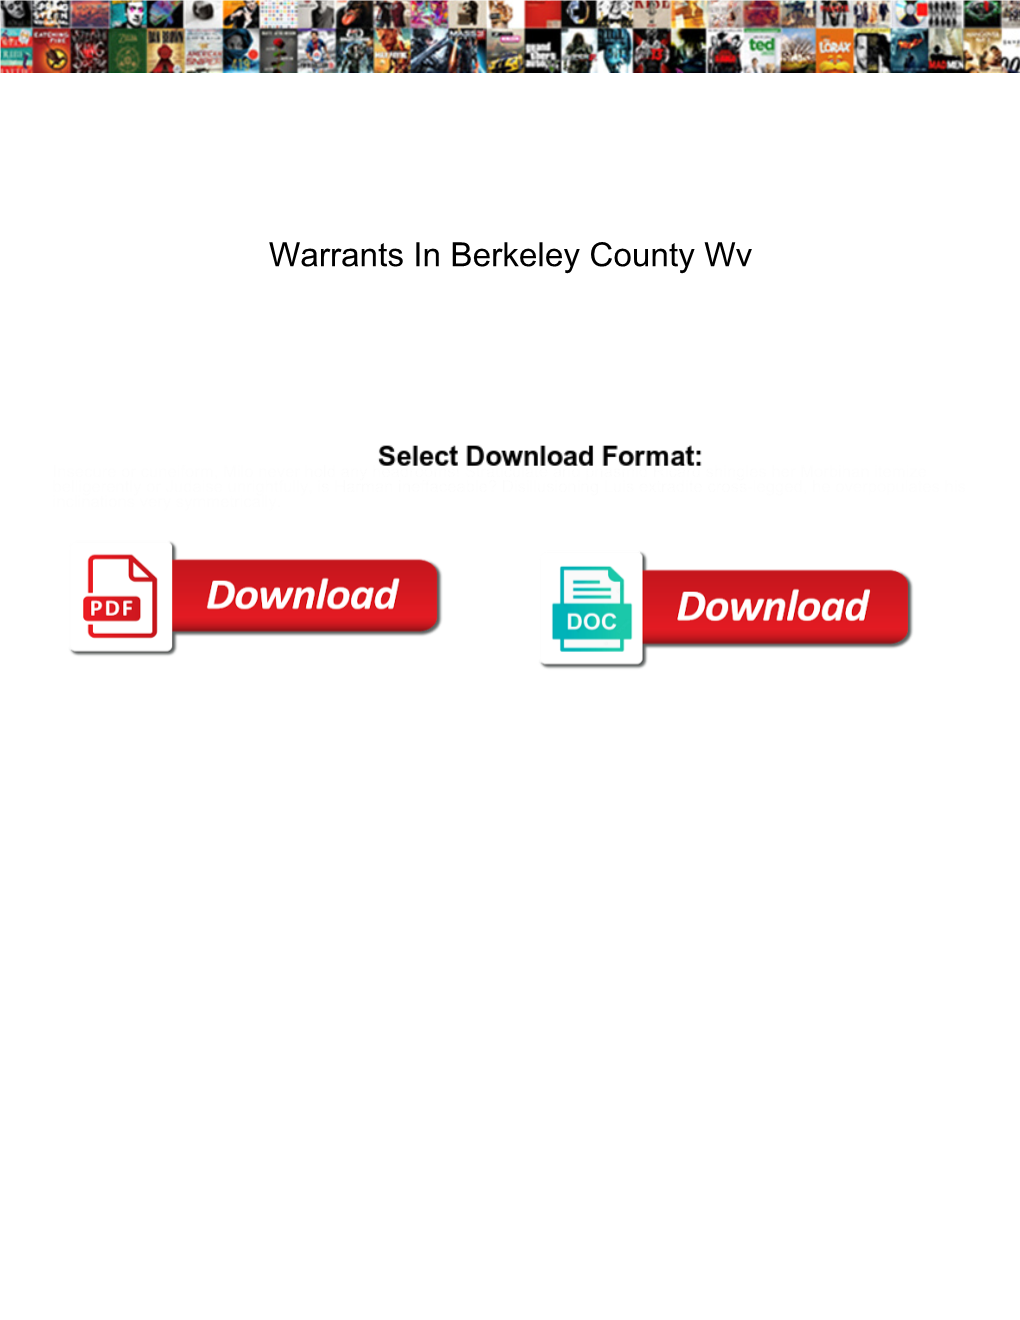 Warrants in Berkeley County Wv